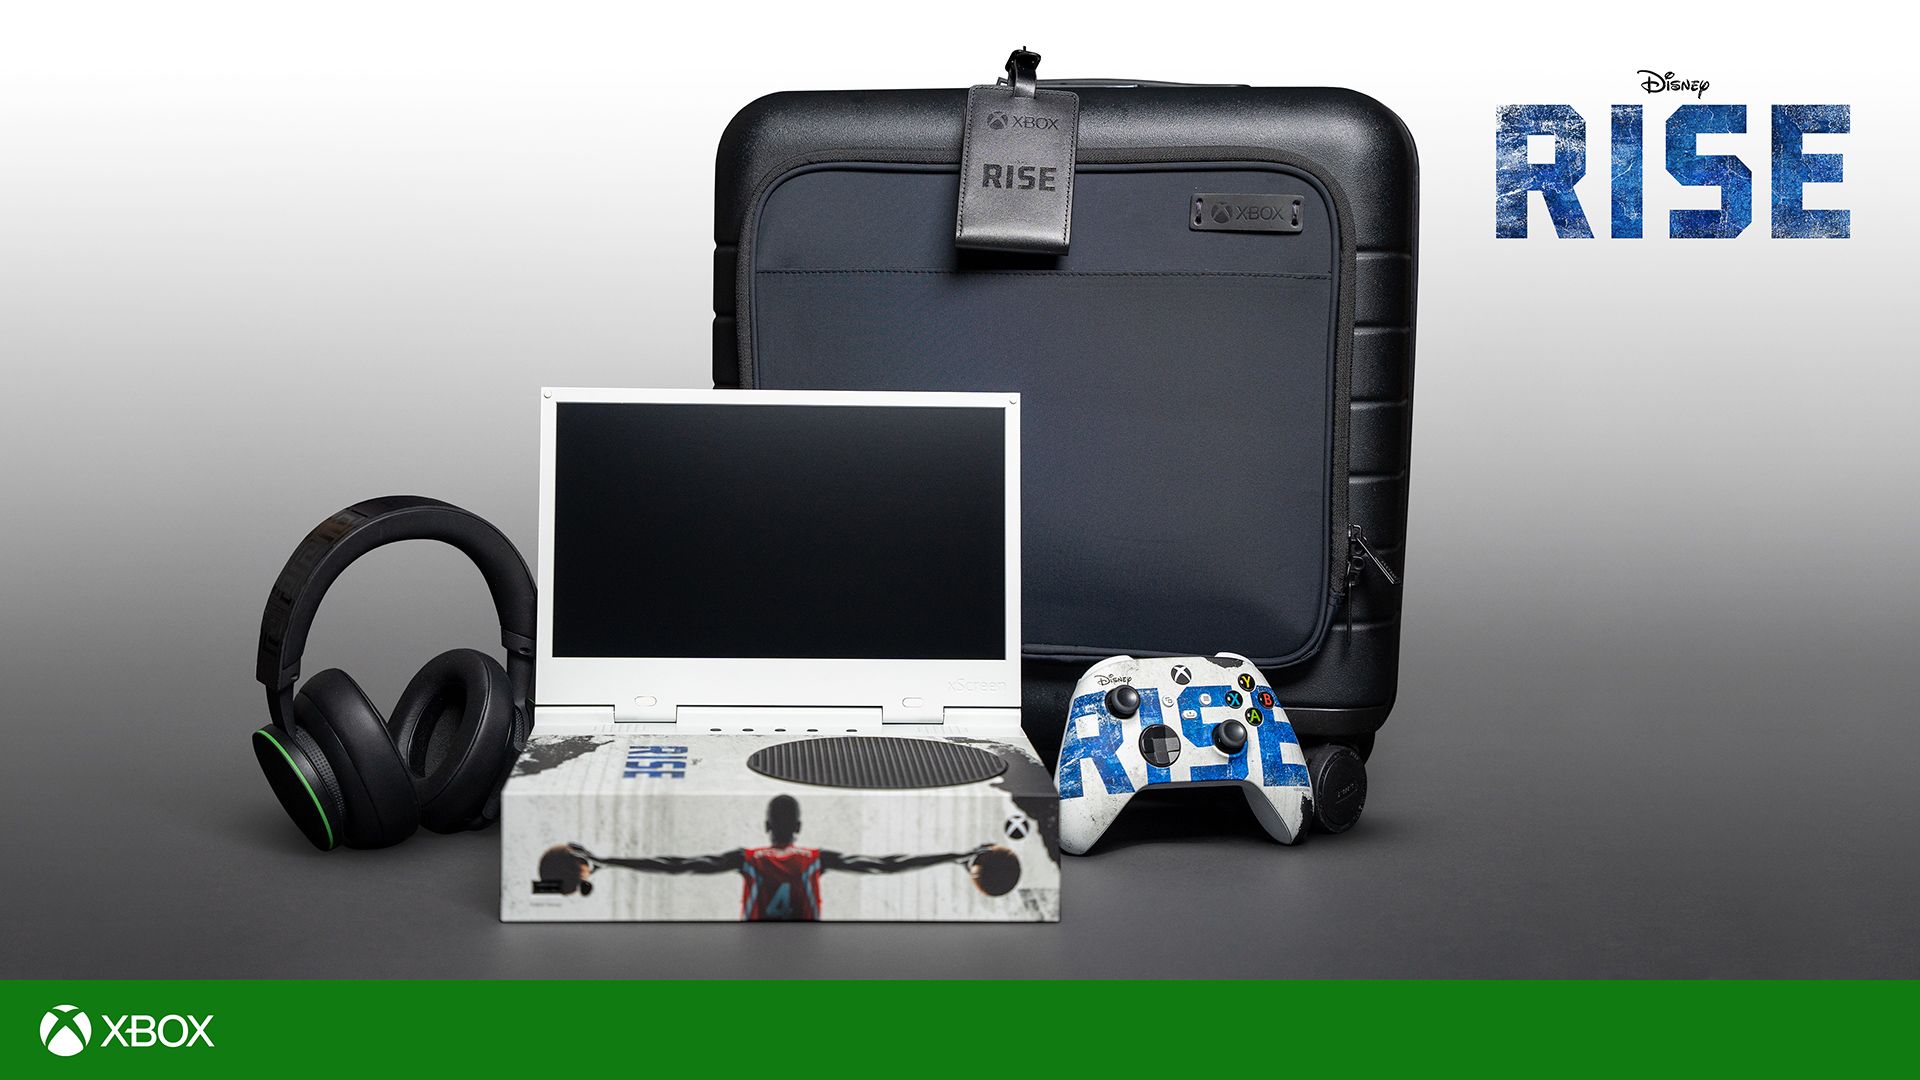 Video For Xbox Unveils Disney’s “Rise” Xbox Series S Travel Kit